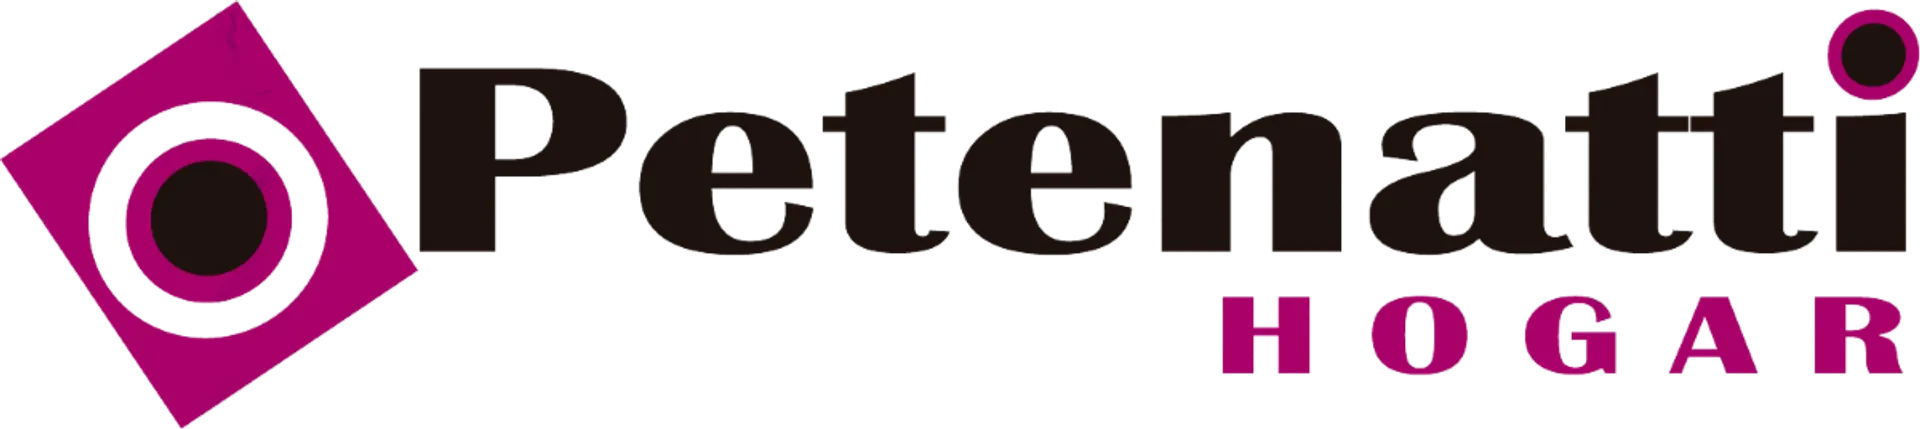 PETENATTI HOGAR logo